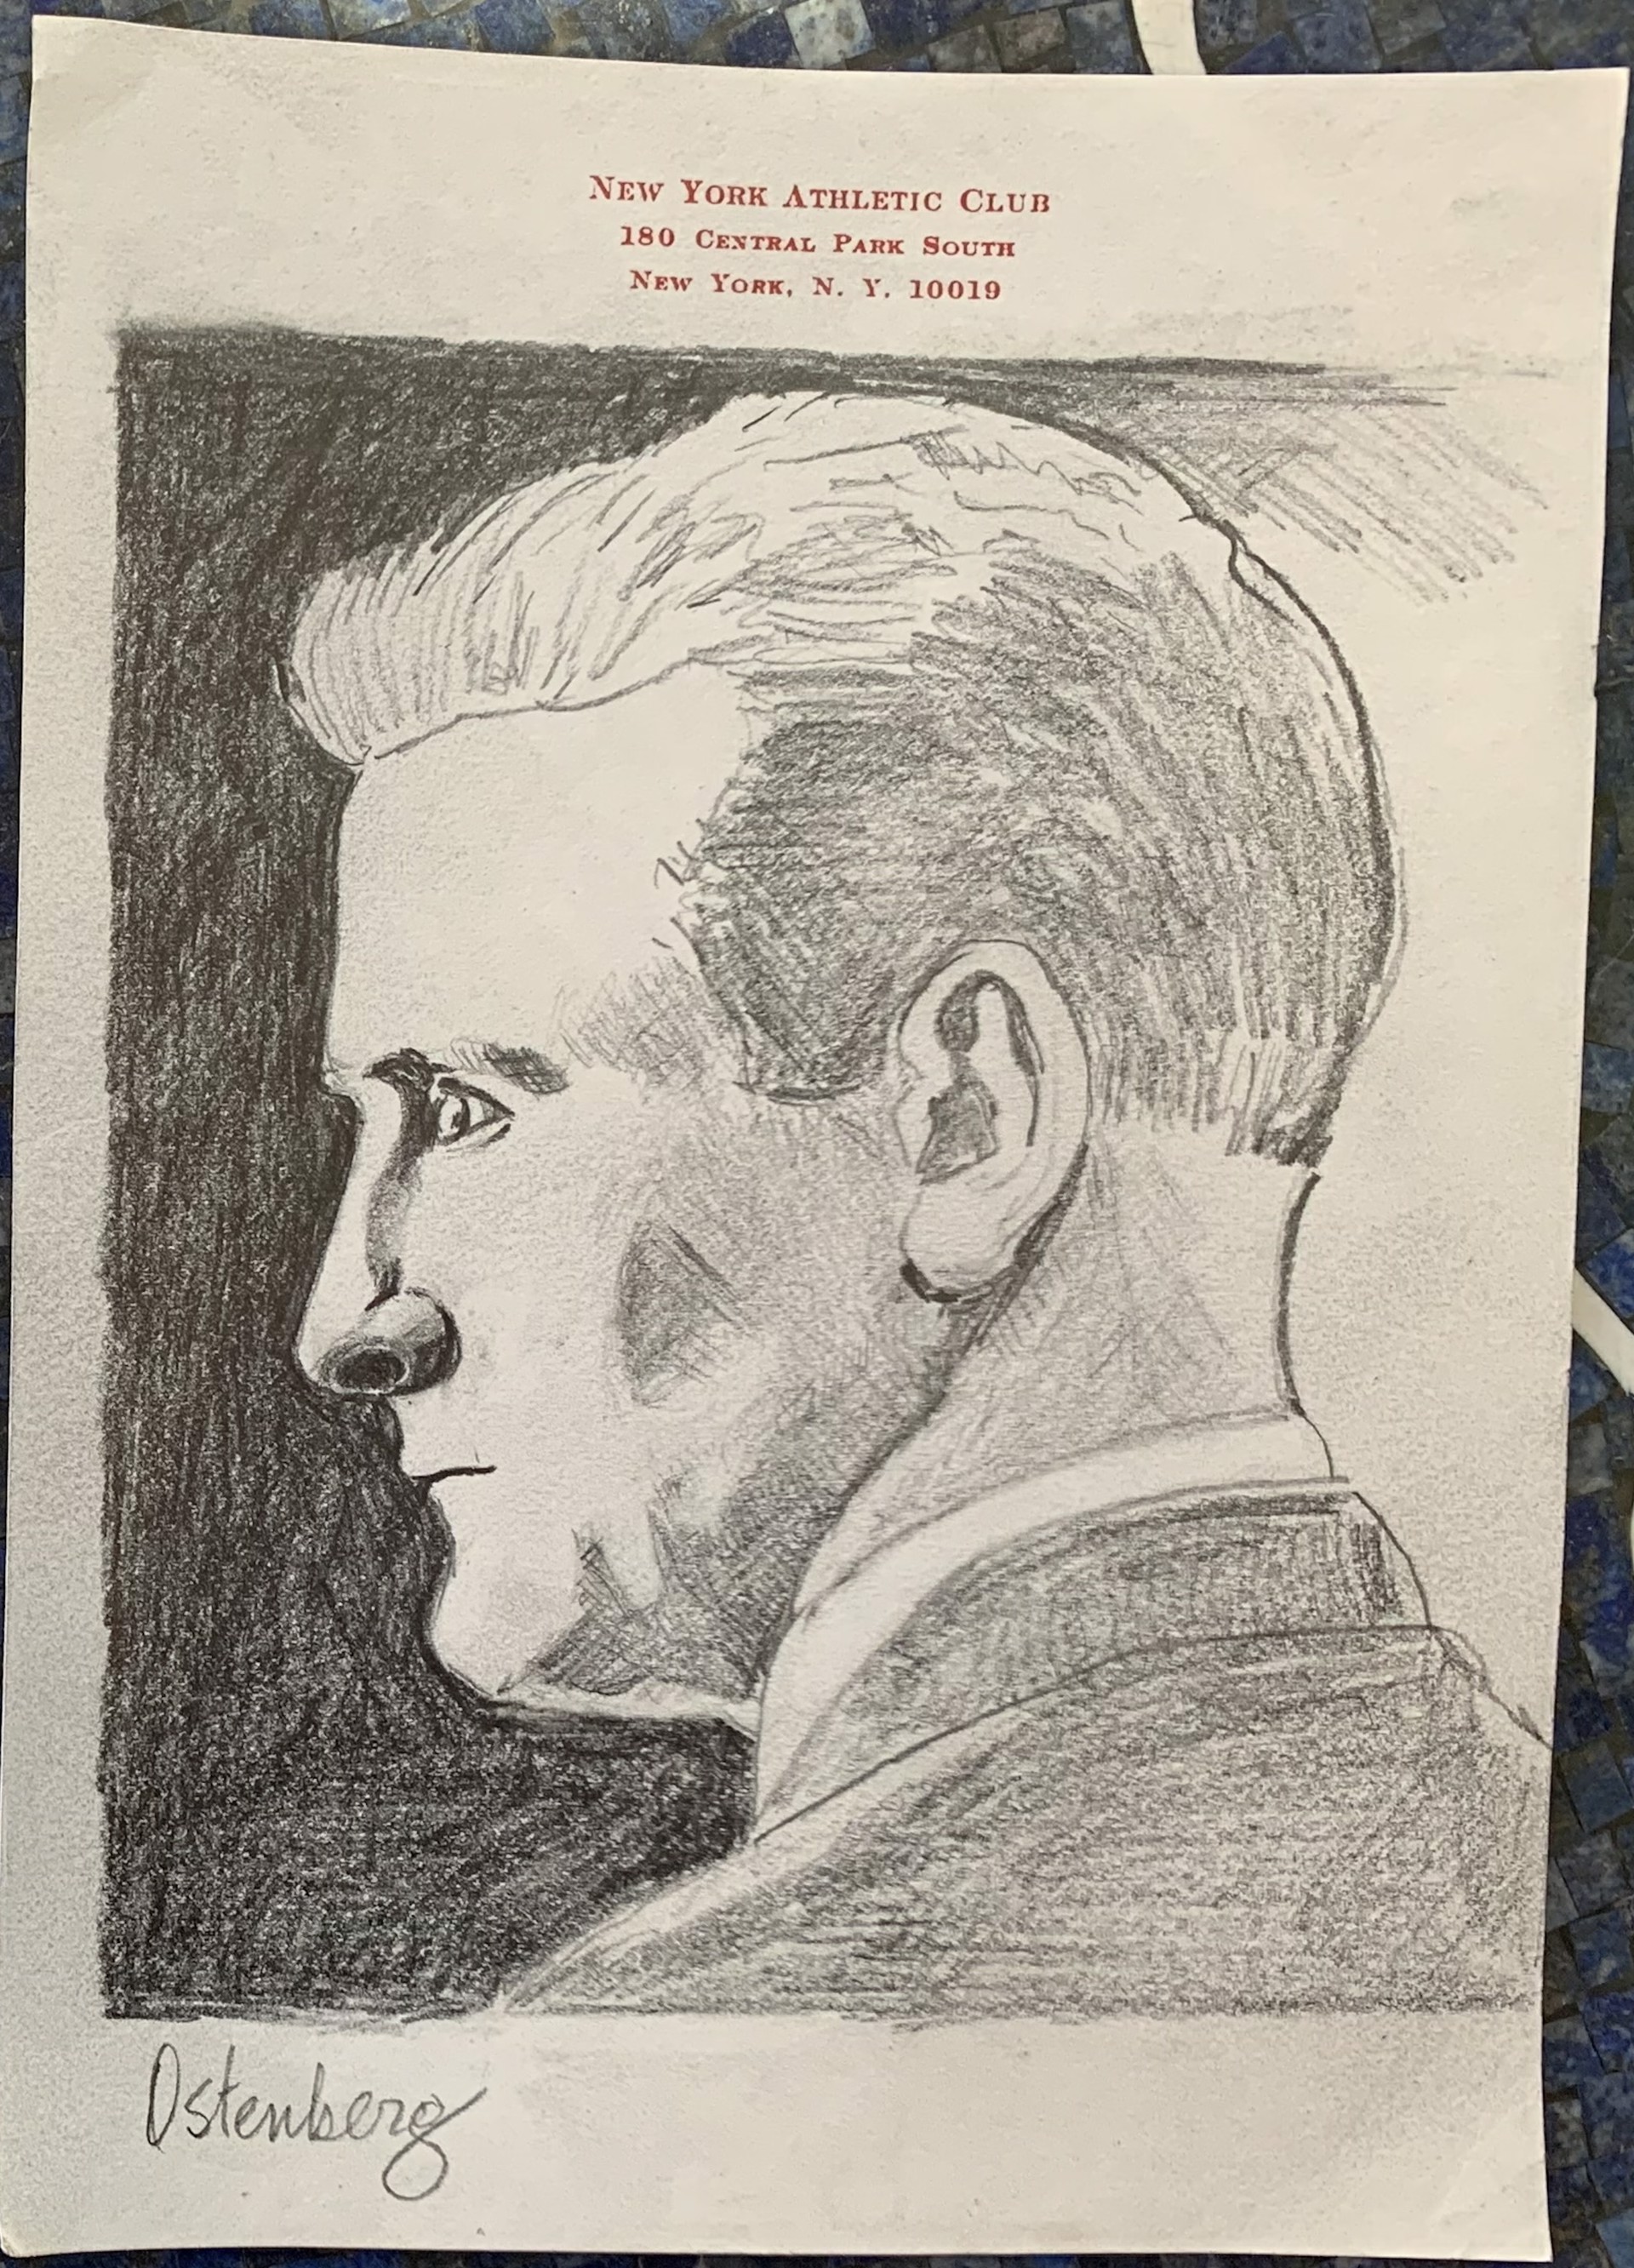 F Scott Fitzgerald by Thomas Ostenberg